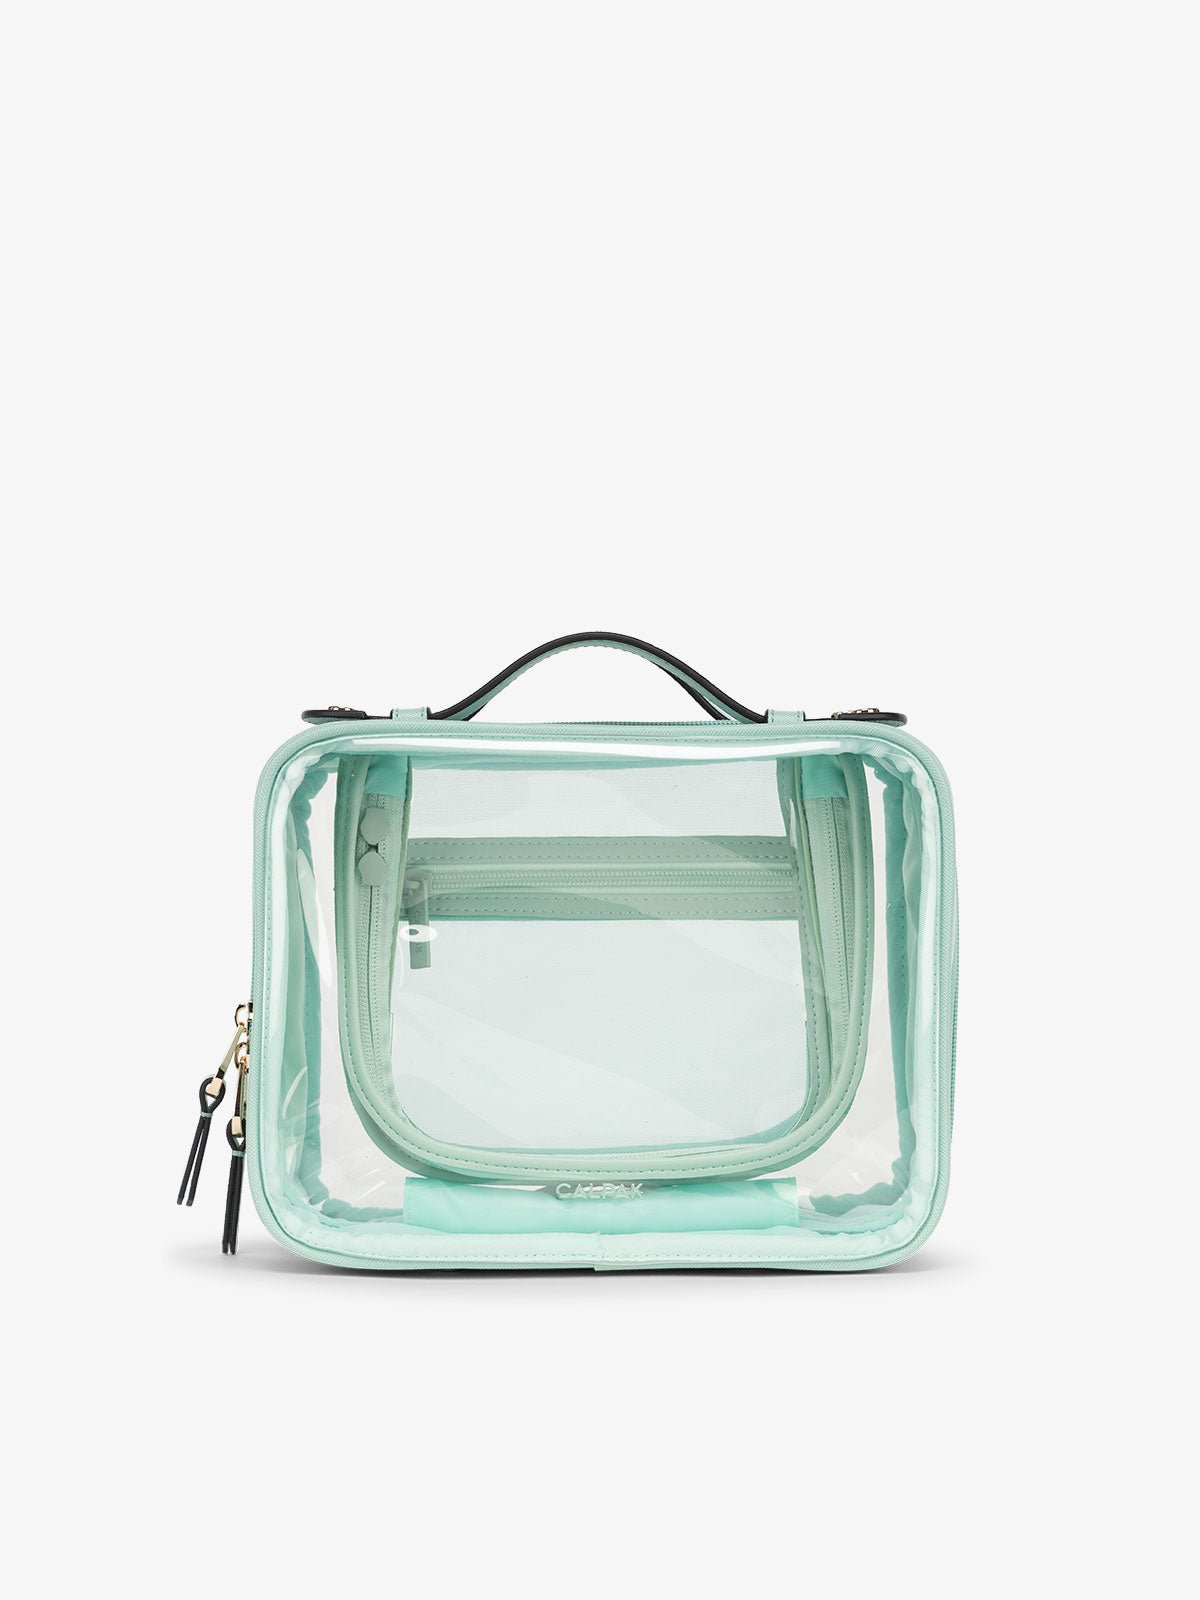 CALPAK Clear makeup bag with zippered compartments in aqua